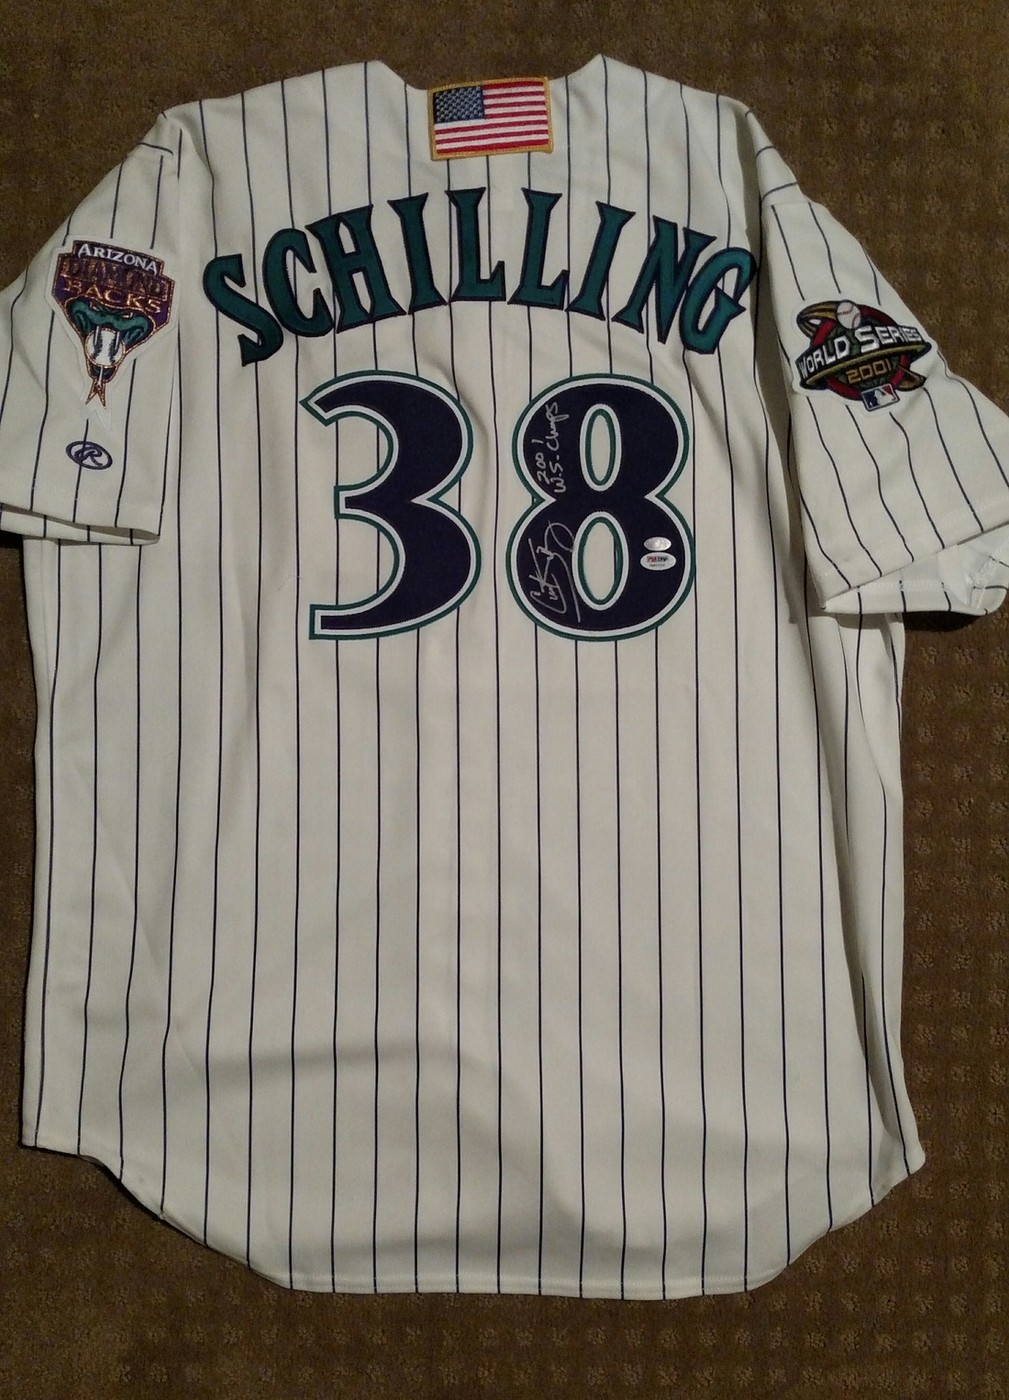 Authentic Curt Schilling 2001 Arizona Diamondback World Series Home Jersey  Autographed (w/2001 World Series MVP signature)